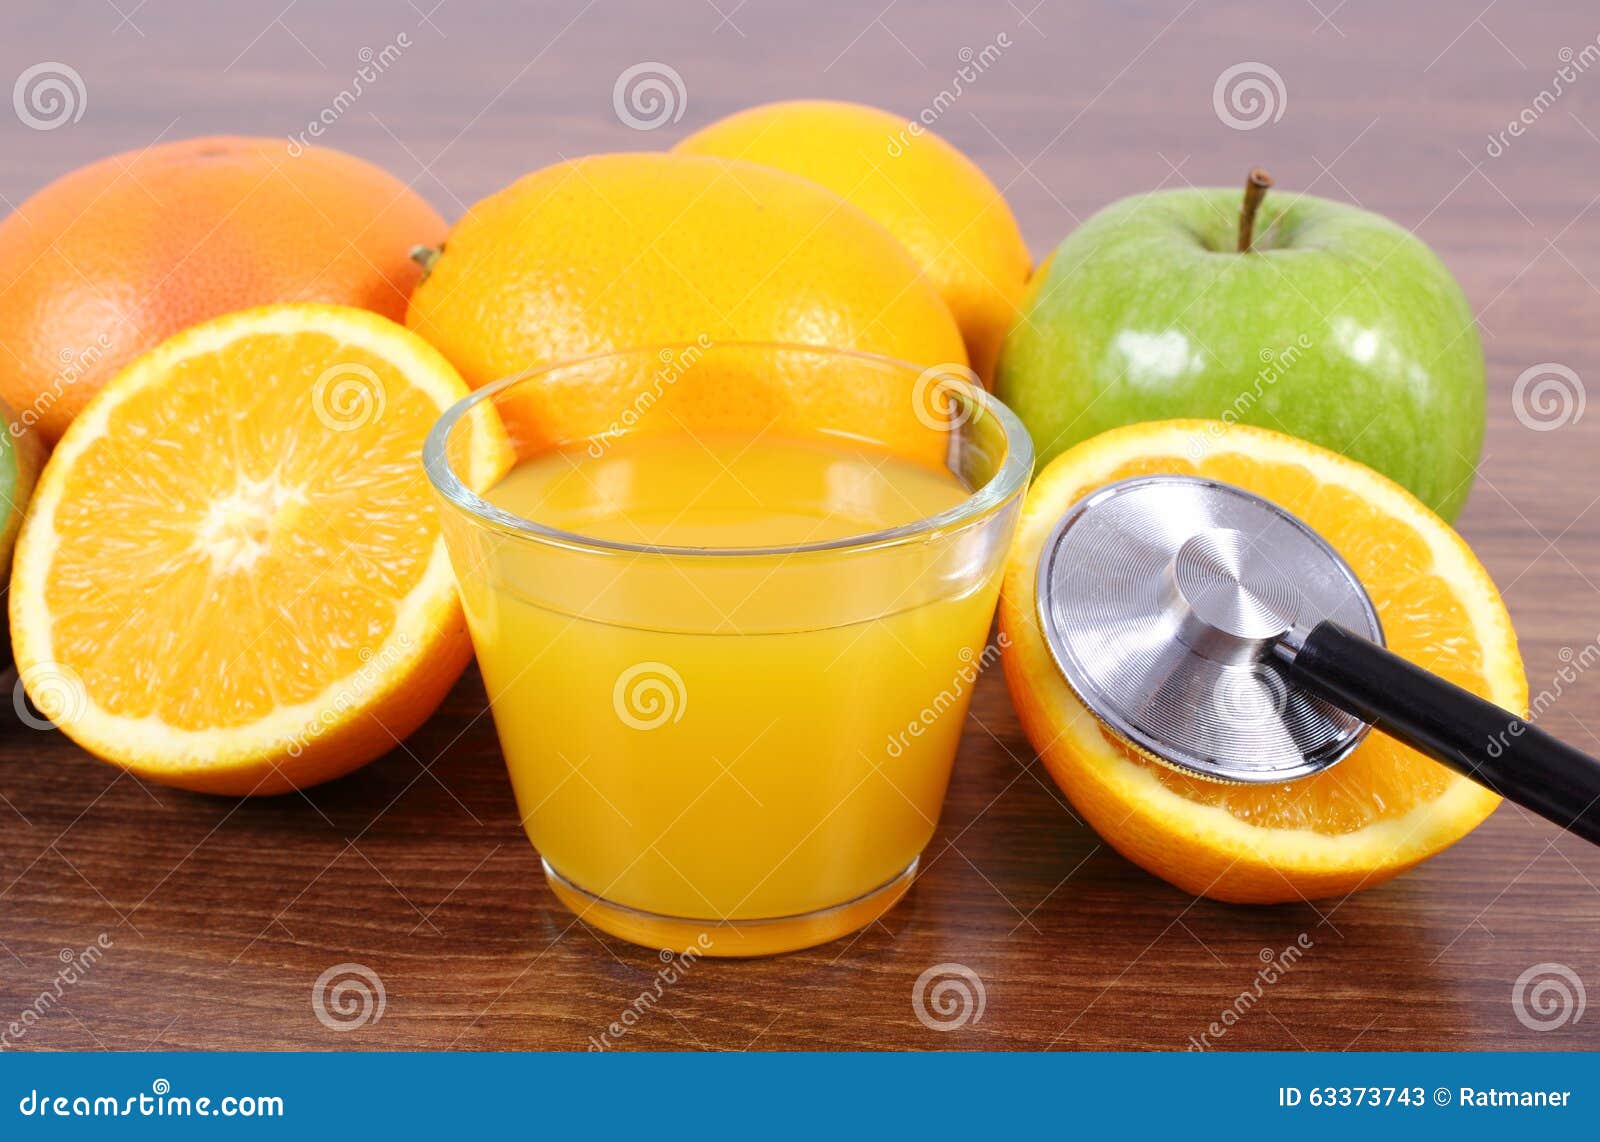 ... orange apple, healthy lifestyles nutrition and strengthening immunity